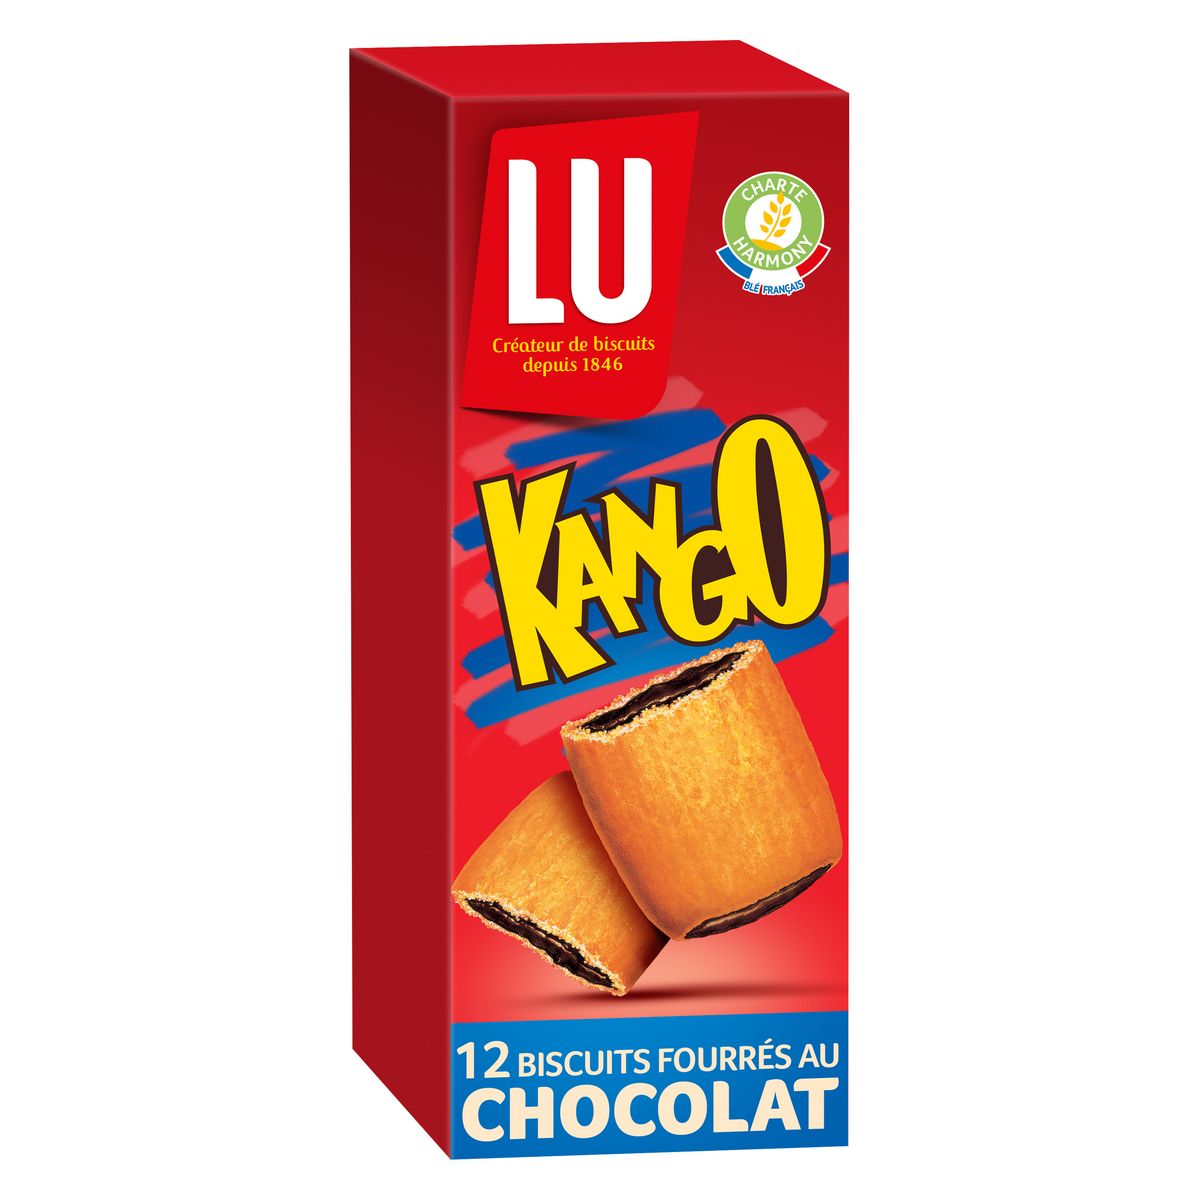 LU Kango biscuits fourrés au chocolat 12 biscuits 225g